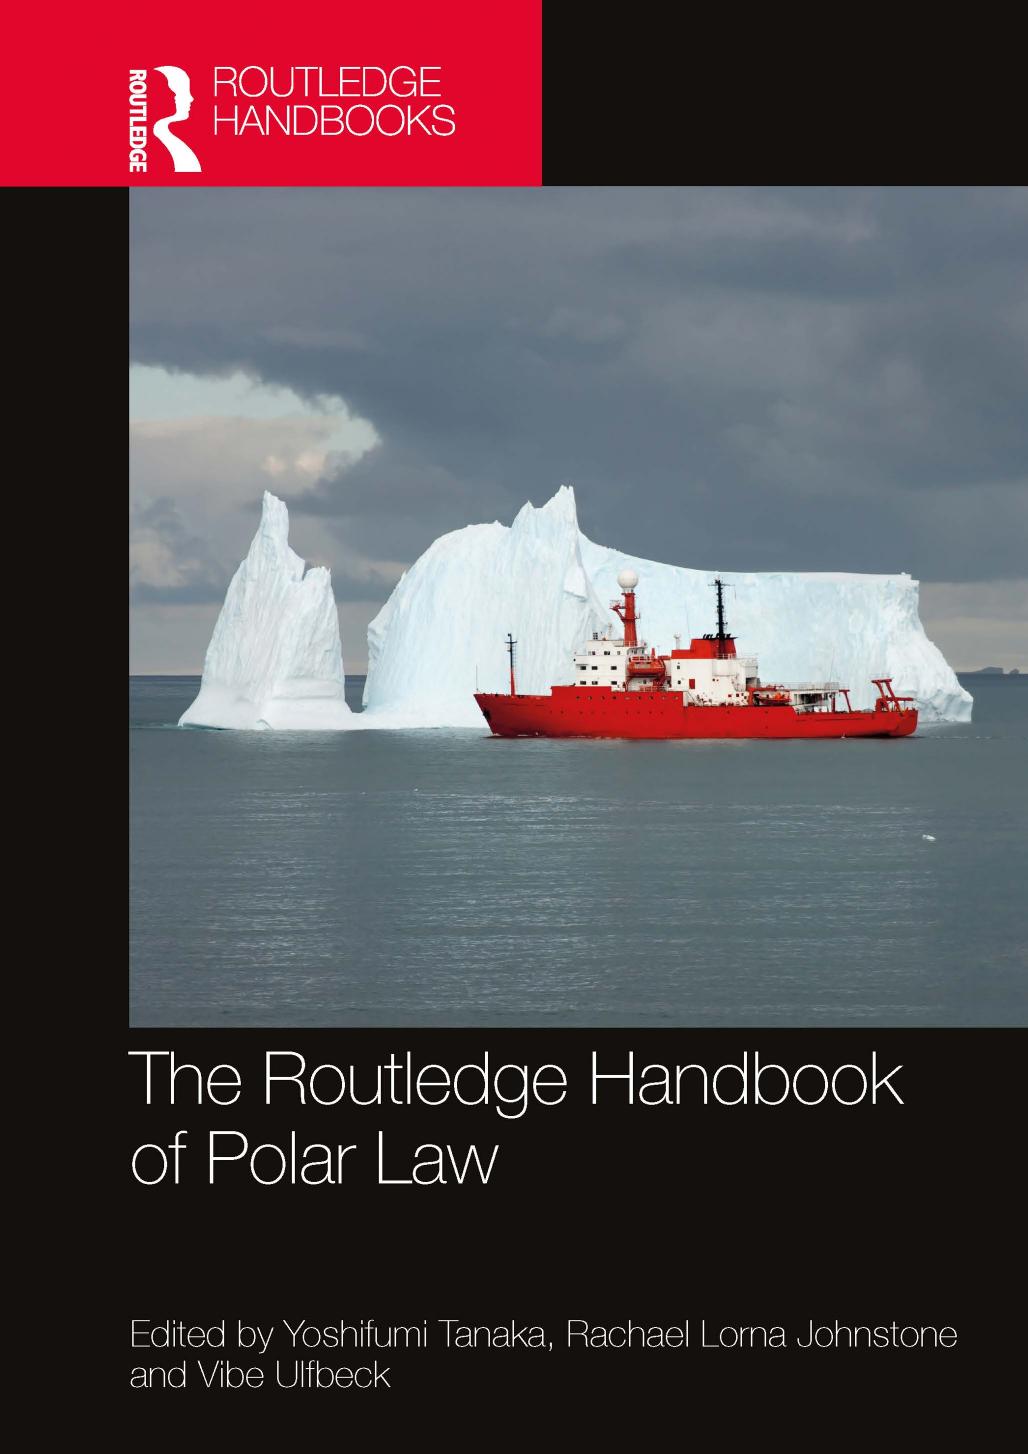 The Routledge Handbook of Polar Law by Yoshifumi Tanaka & Rachael Lorna Johnstone & Vibe Ulfbeck